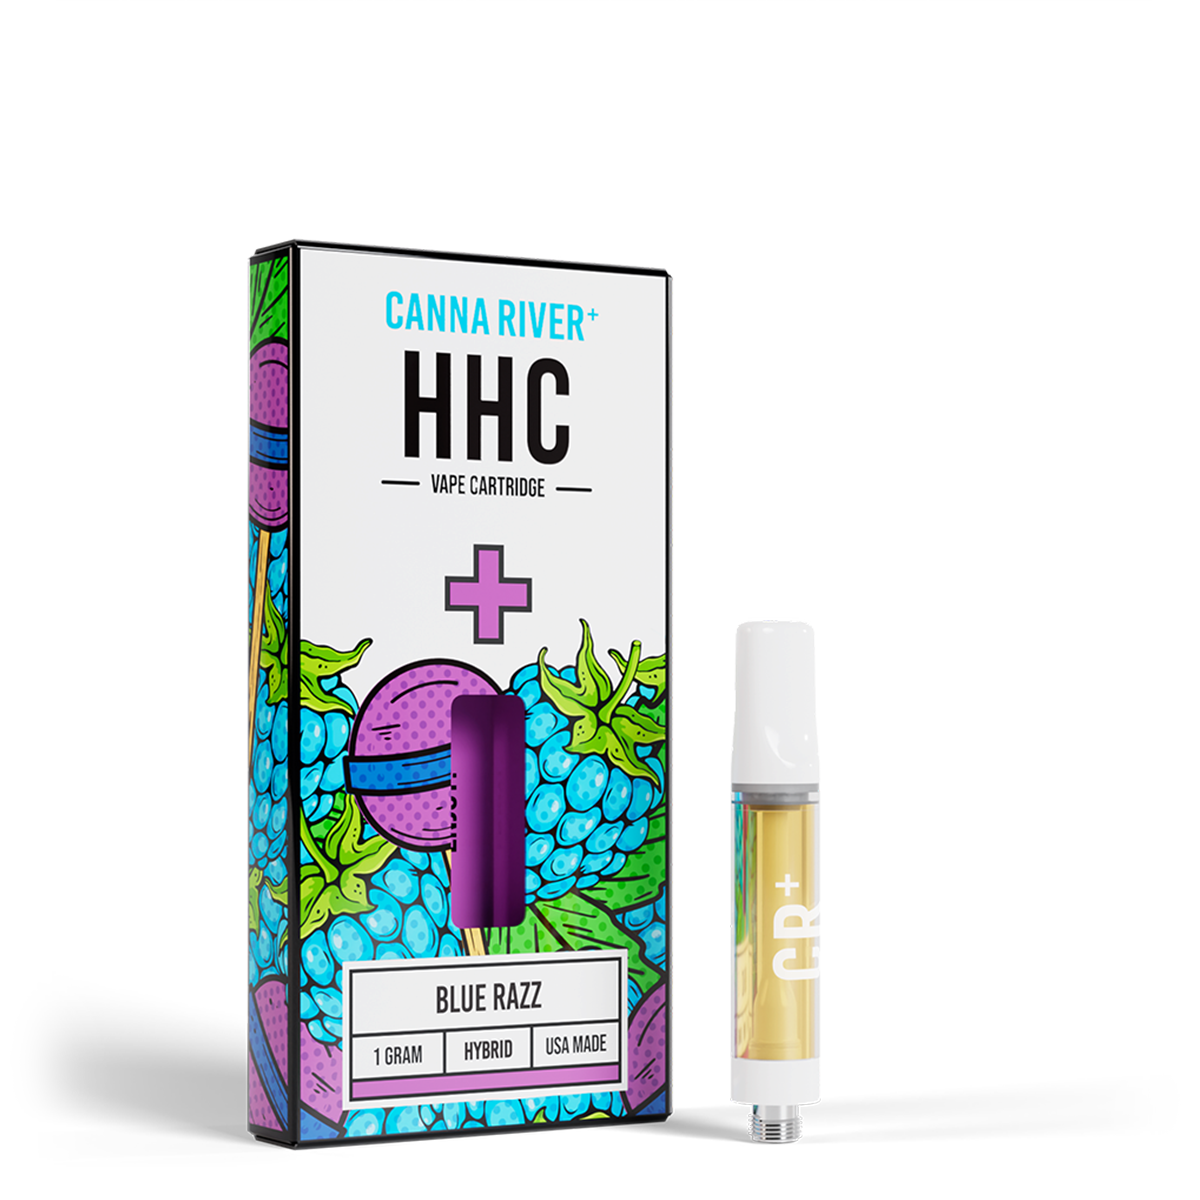 Canna River - HHC Cartridge - Blue Razz - 1 Gram (Hybrid)